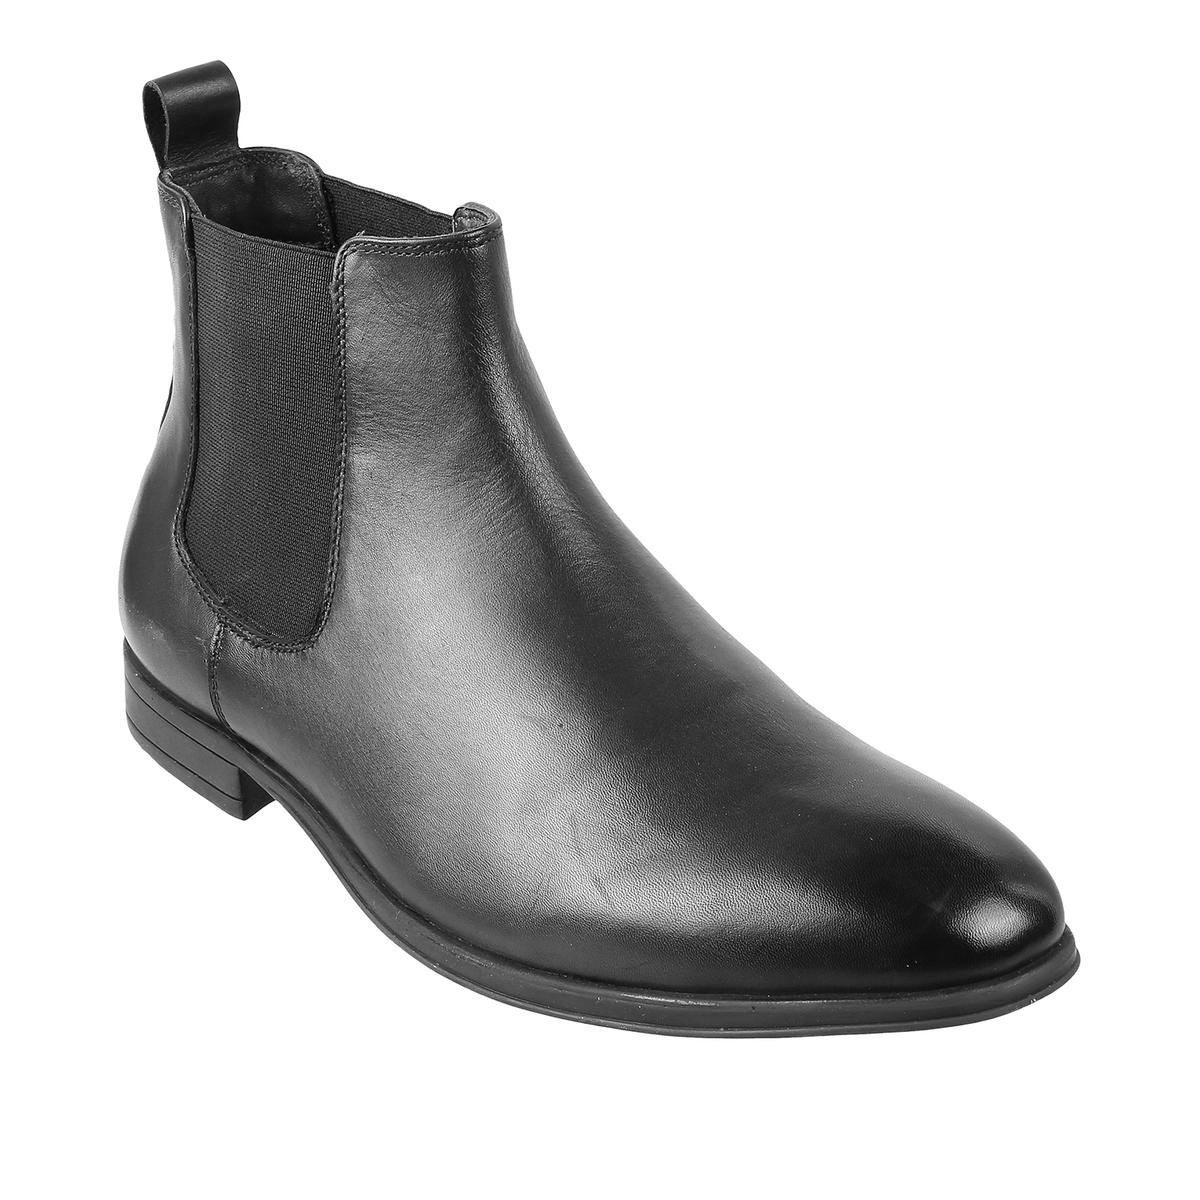 Buy Women Black Formal Sandals Online | SKU: 31-4995-11-36-Metro Shoes